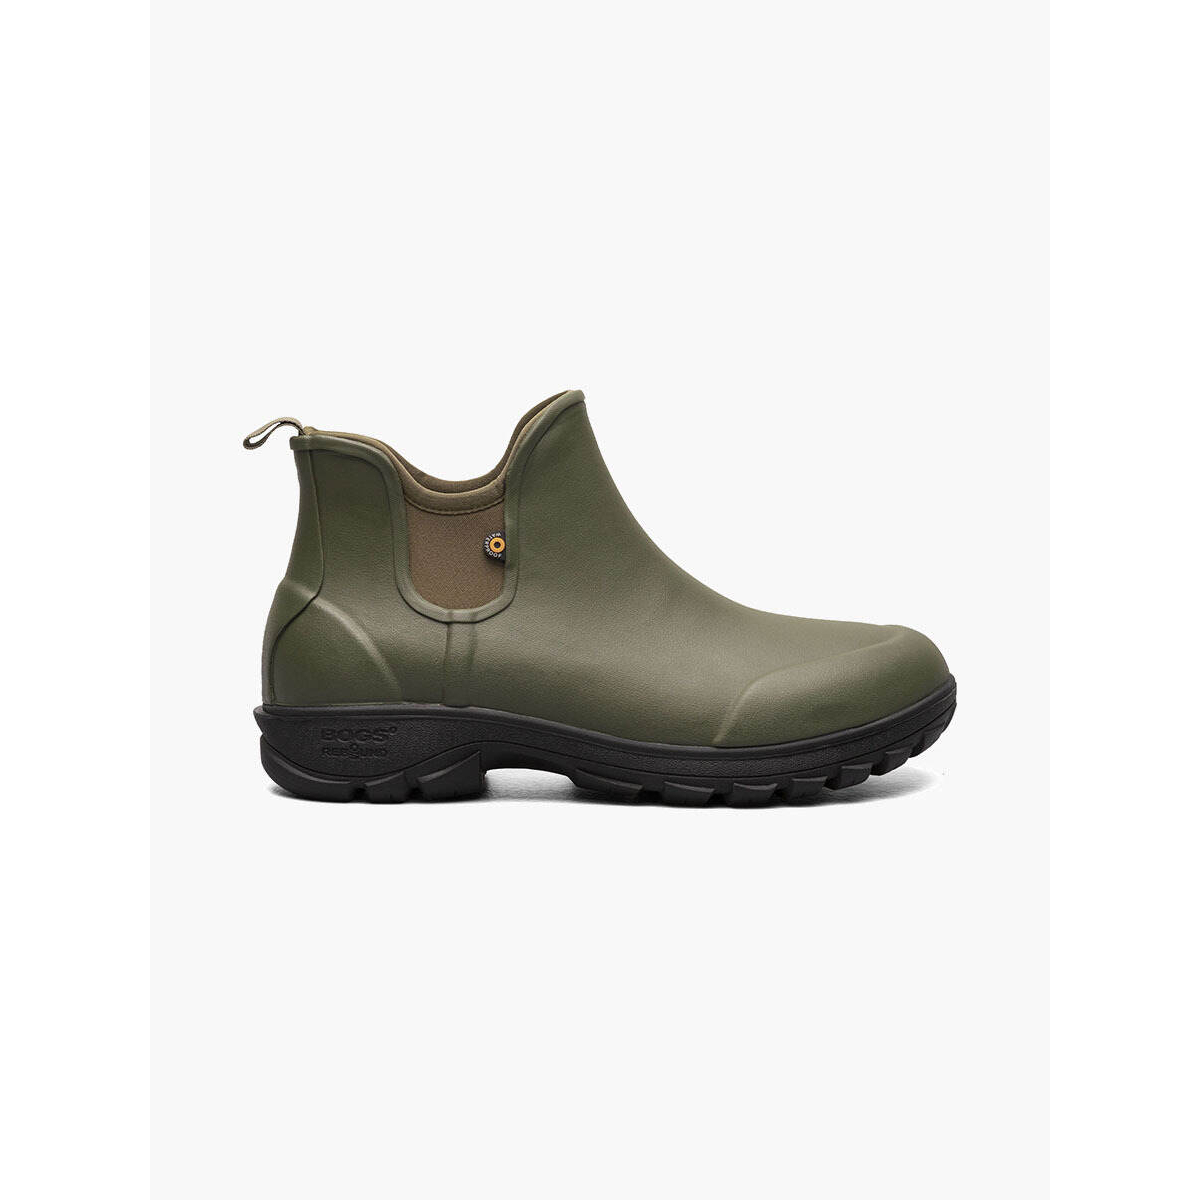 BOGS Men's Sauvie Slip On Insulated Waterproof Rain Boot Olive Multi - 72208-302 - OLIVE MLTI, 13